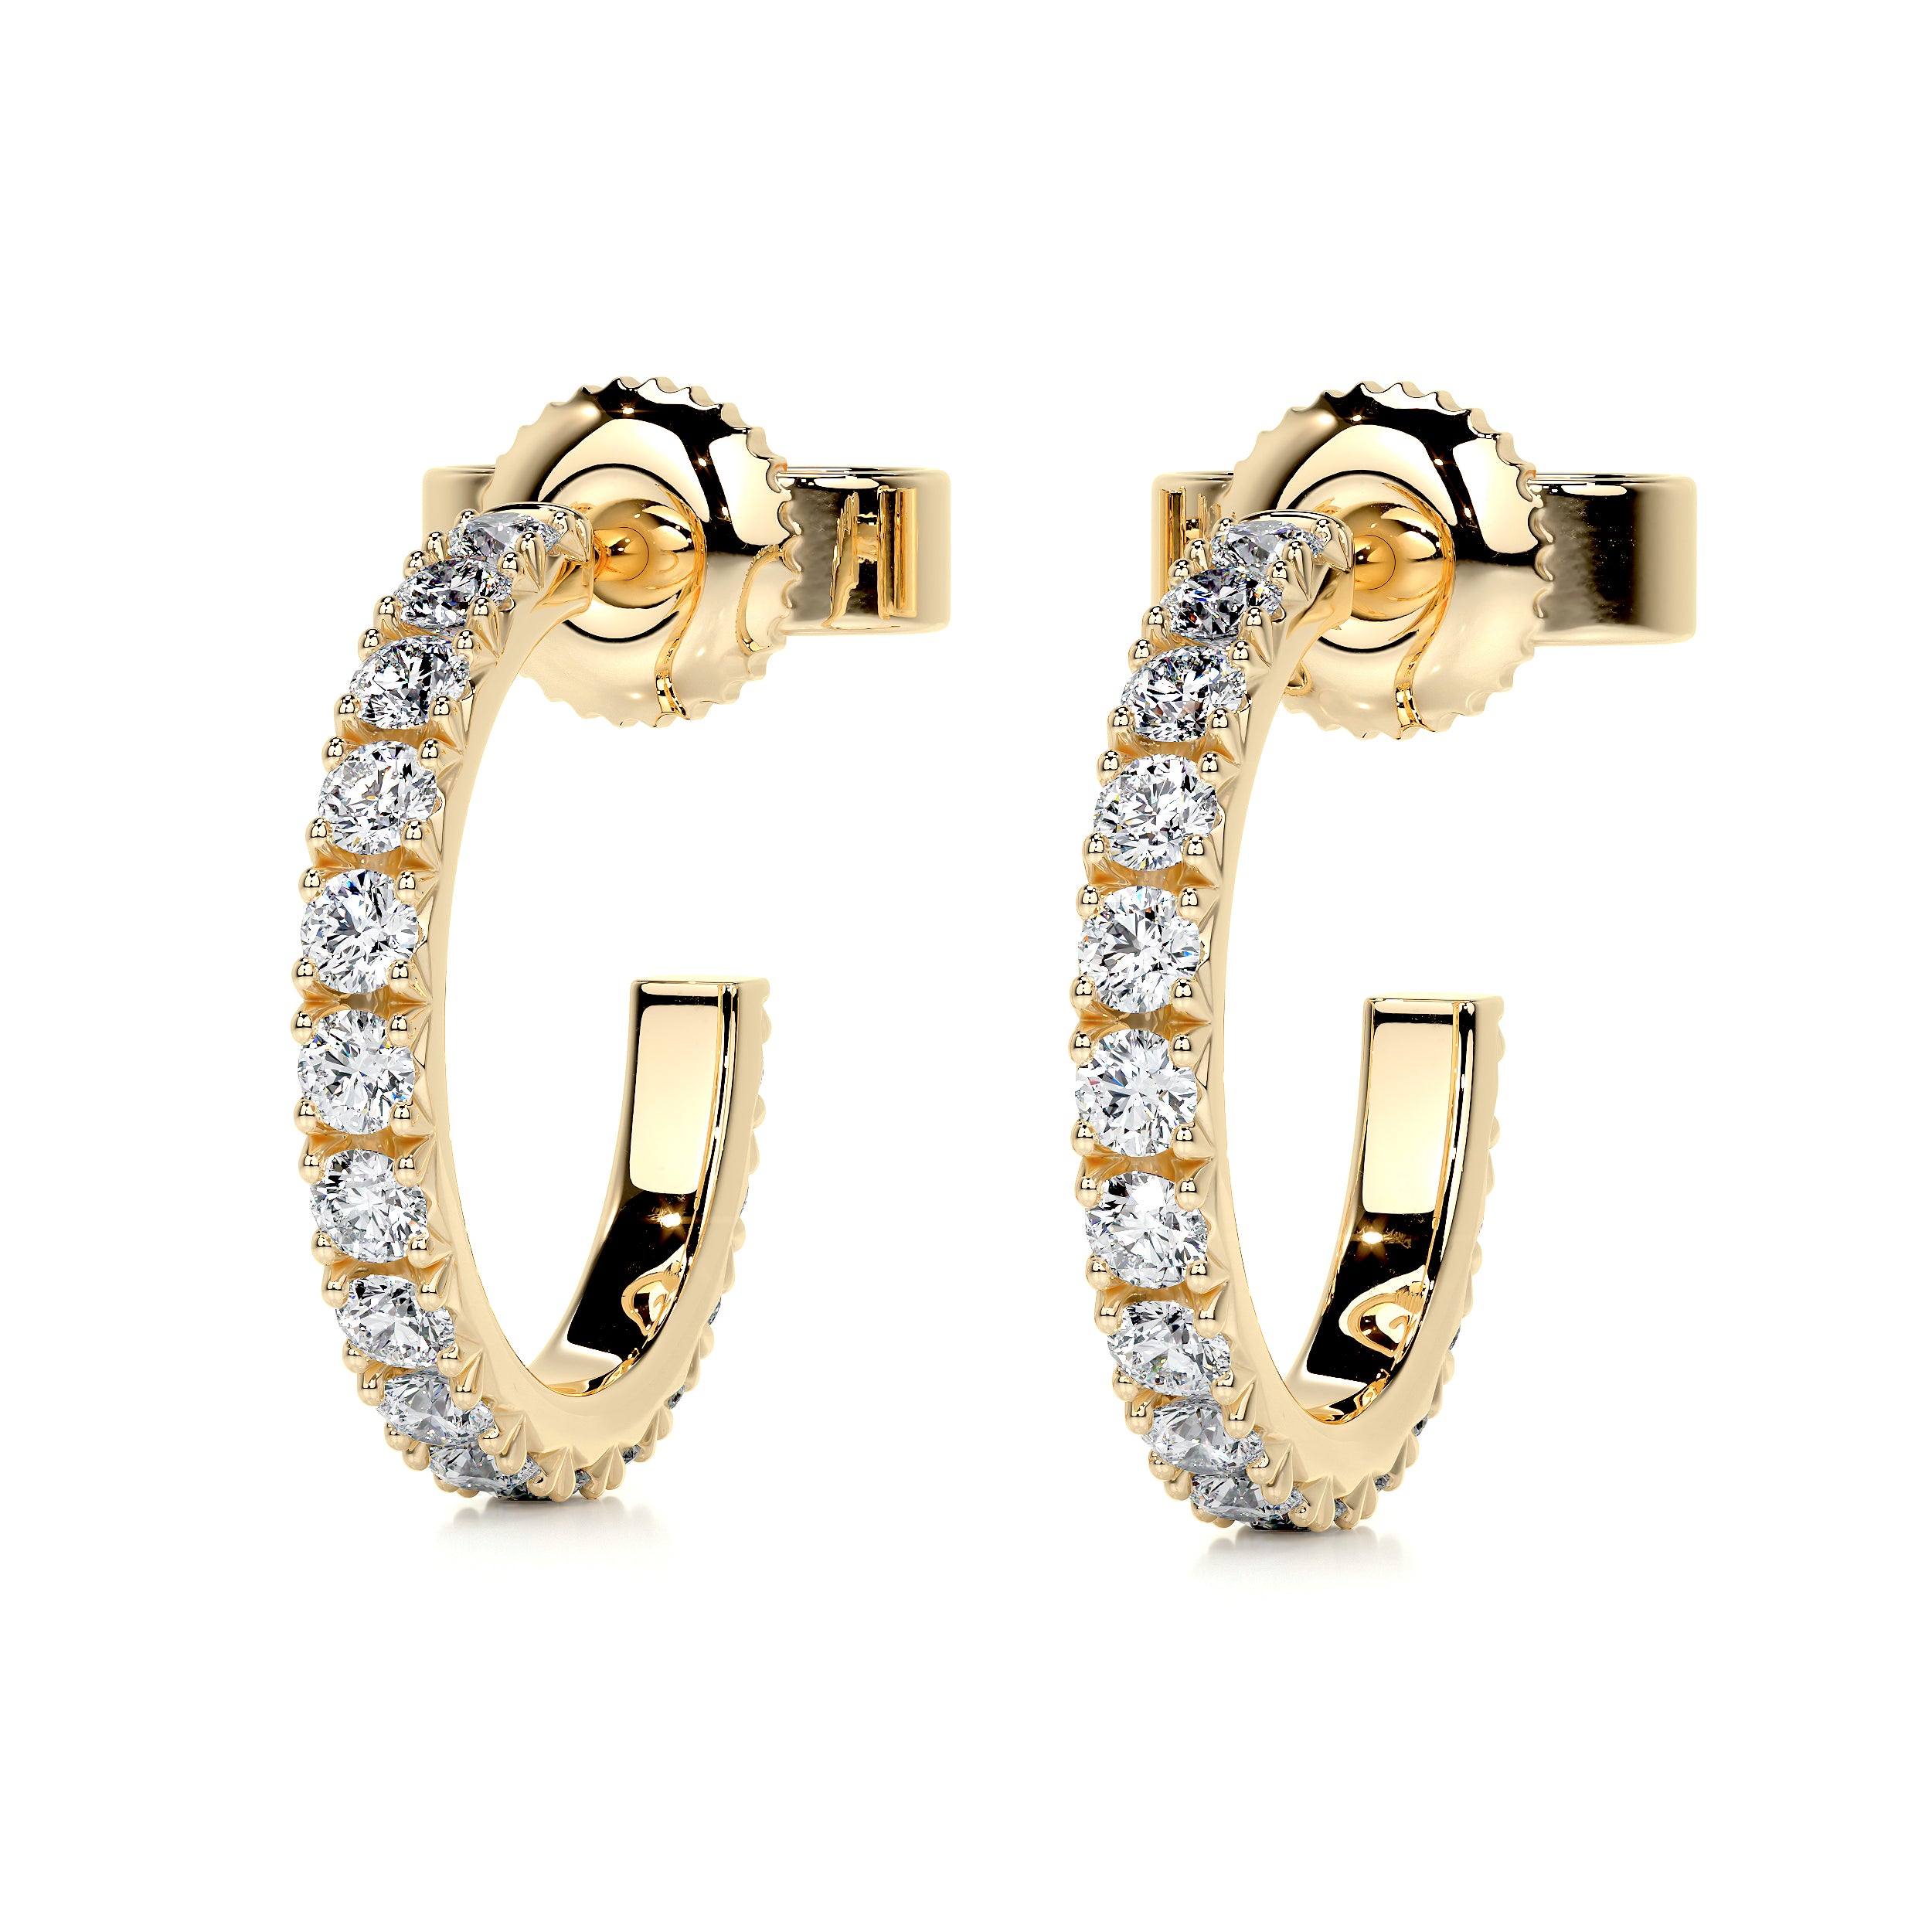 Nicole Diamond Earrings   (2.5 Carat) -18K Yellow Gold